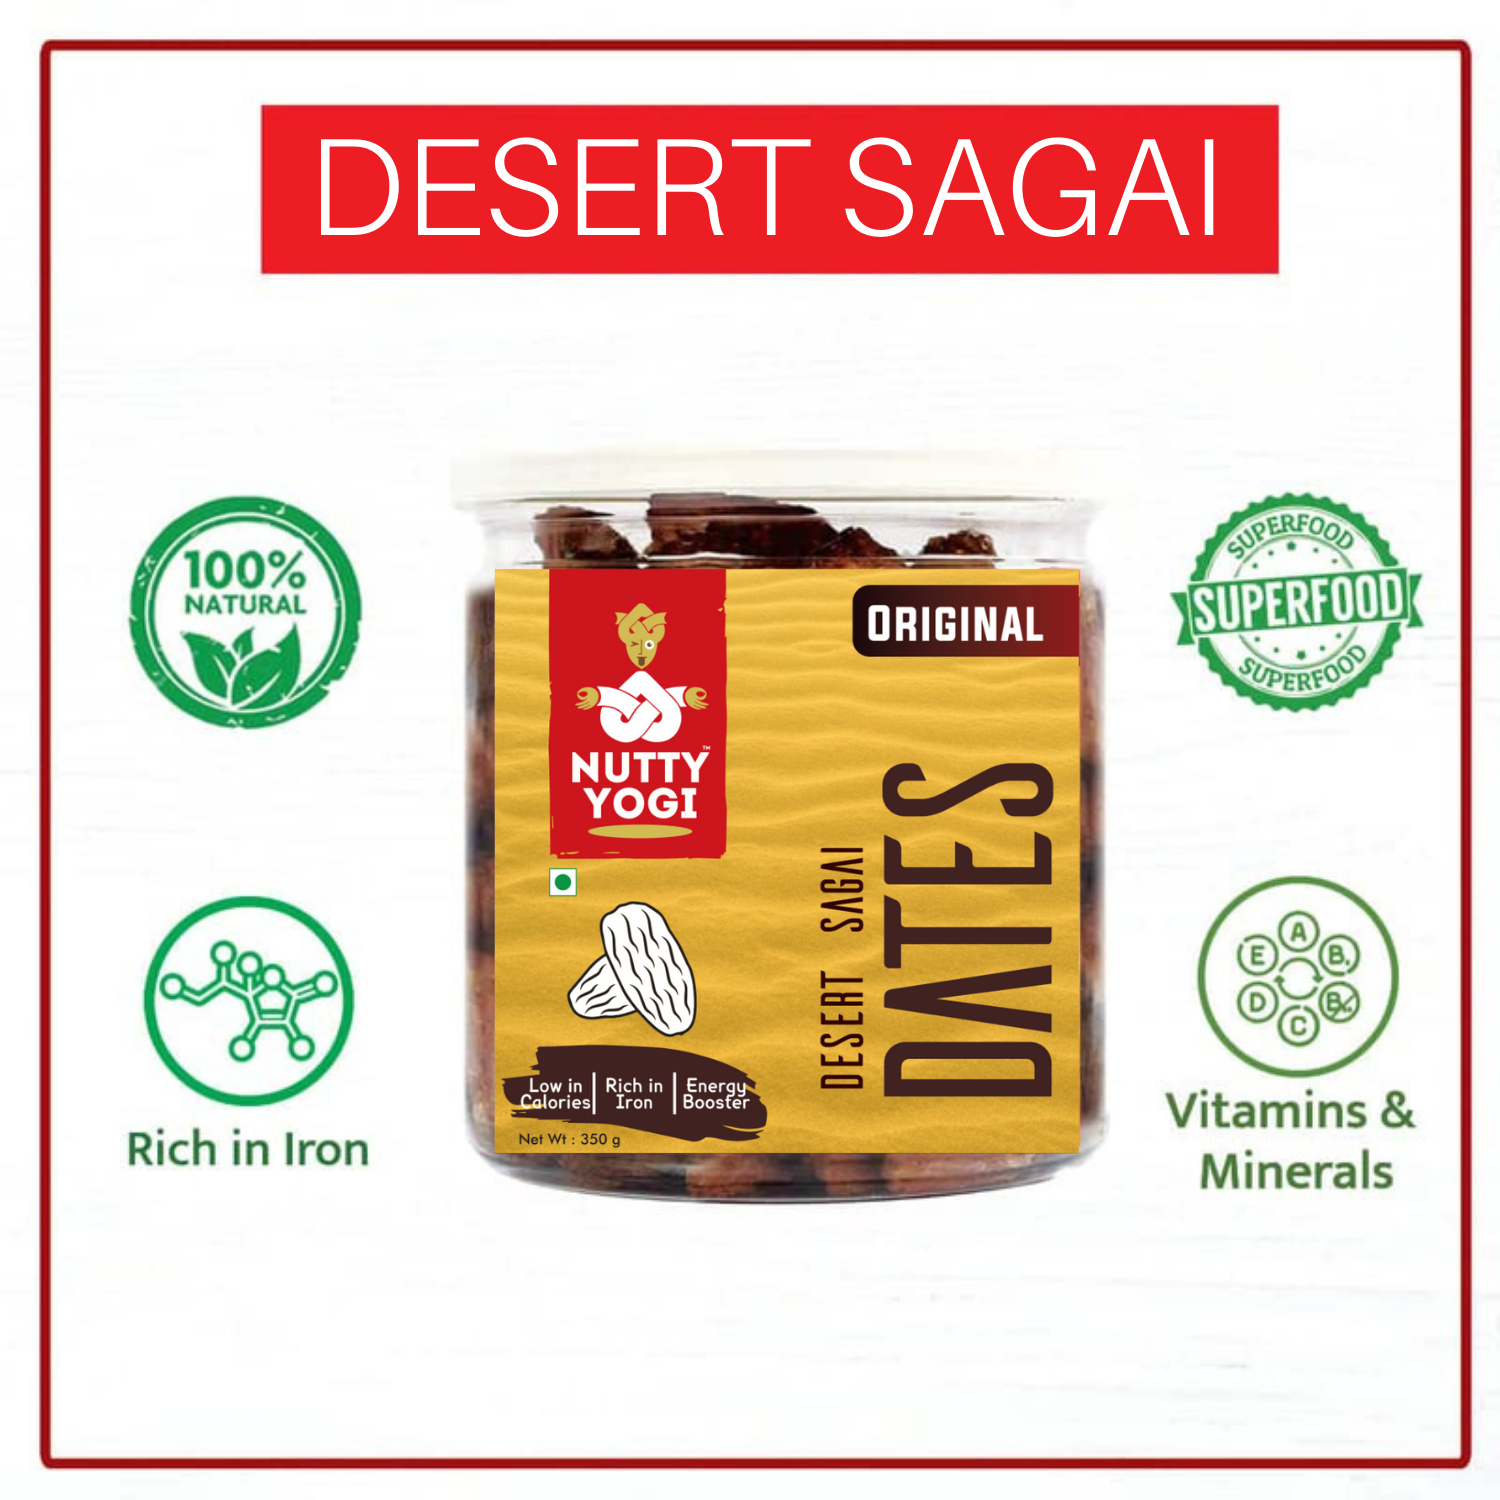 Nutty Yogi Desert Sagai Dates 350 gm